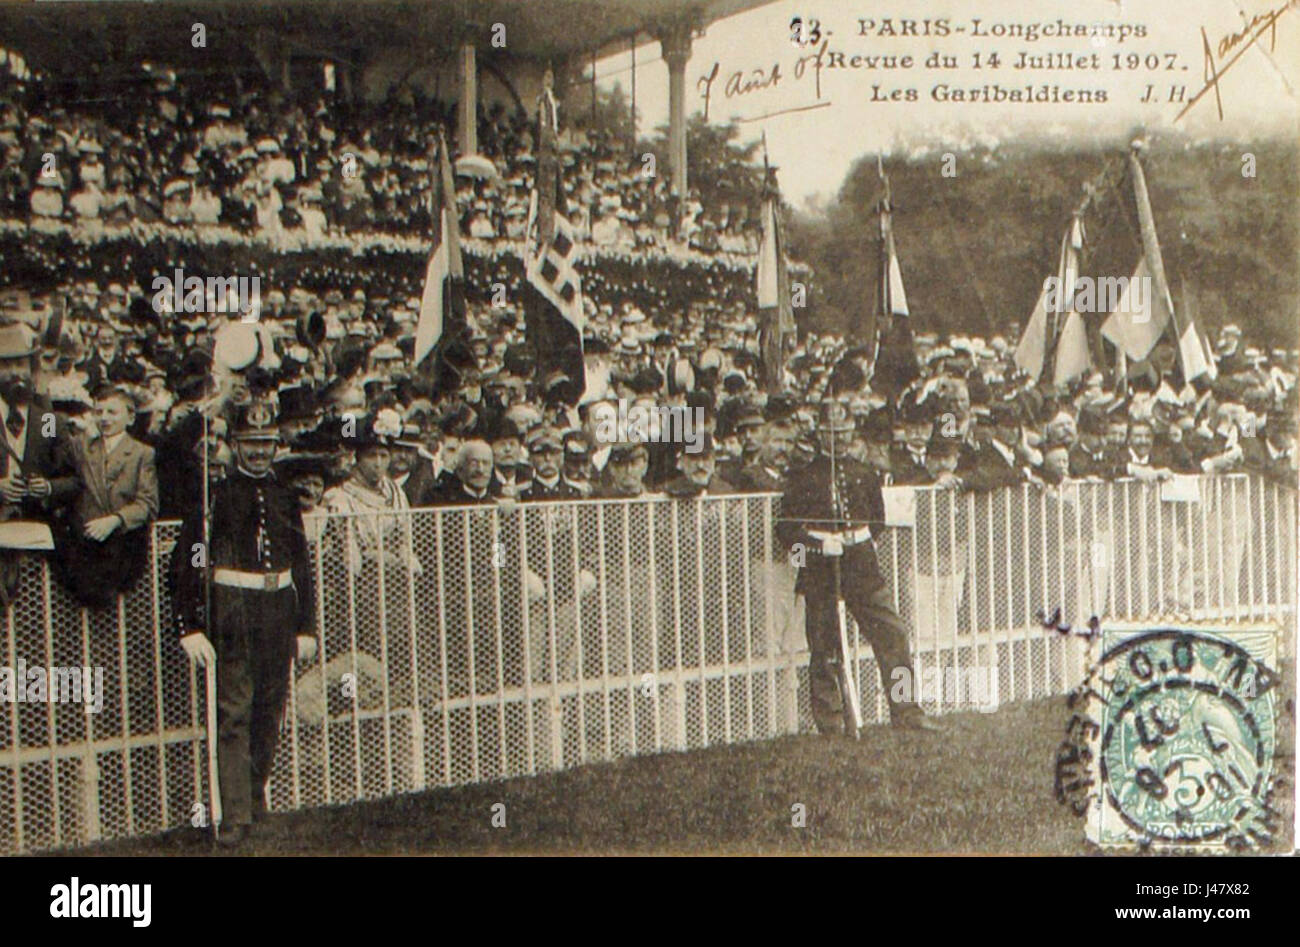 Paris-Longchamps 14 Juillet 1907 Stockfoto